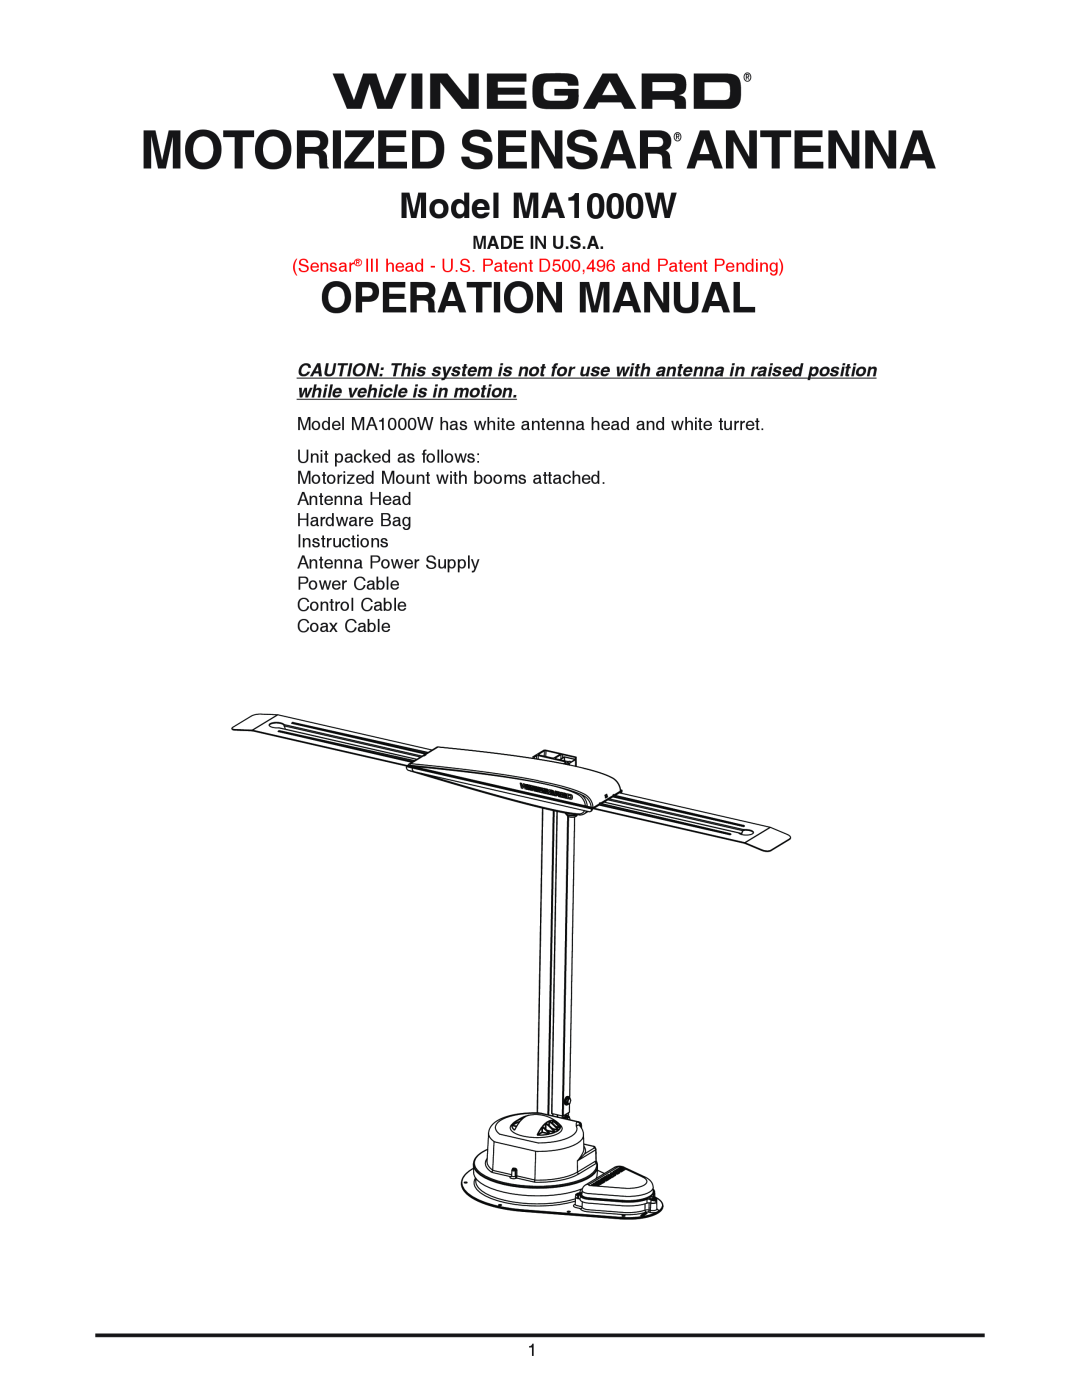 Winegard operation manual Made In U.S.A, Winegard Motorized Sensar Antenna, Operation Manual, Model MA1000W 